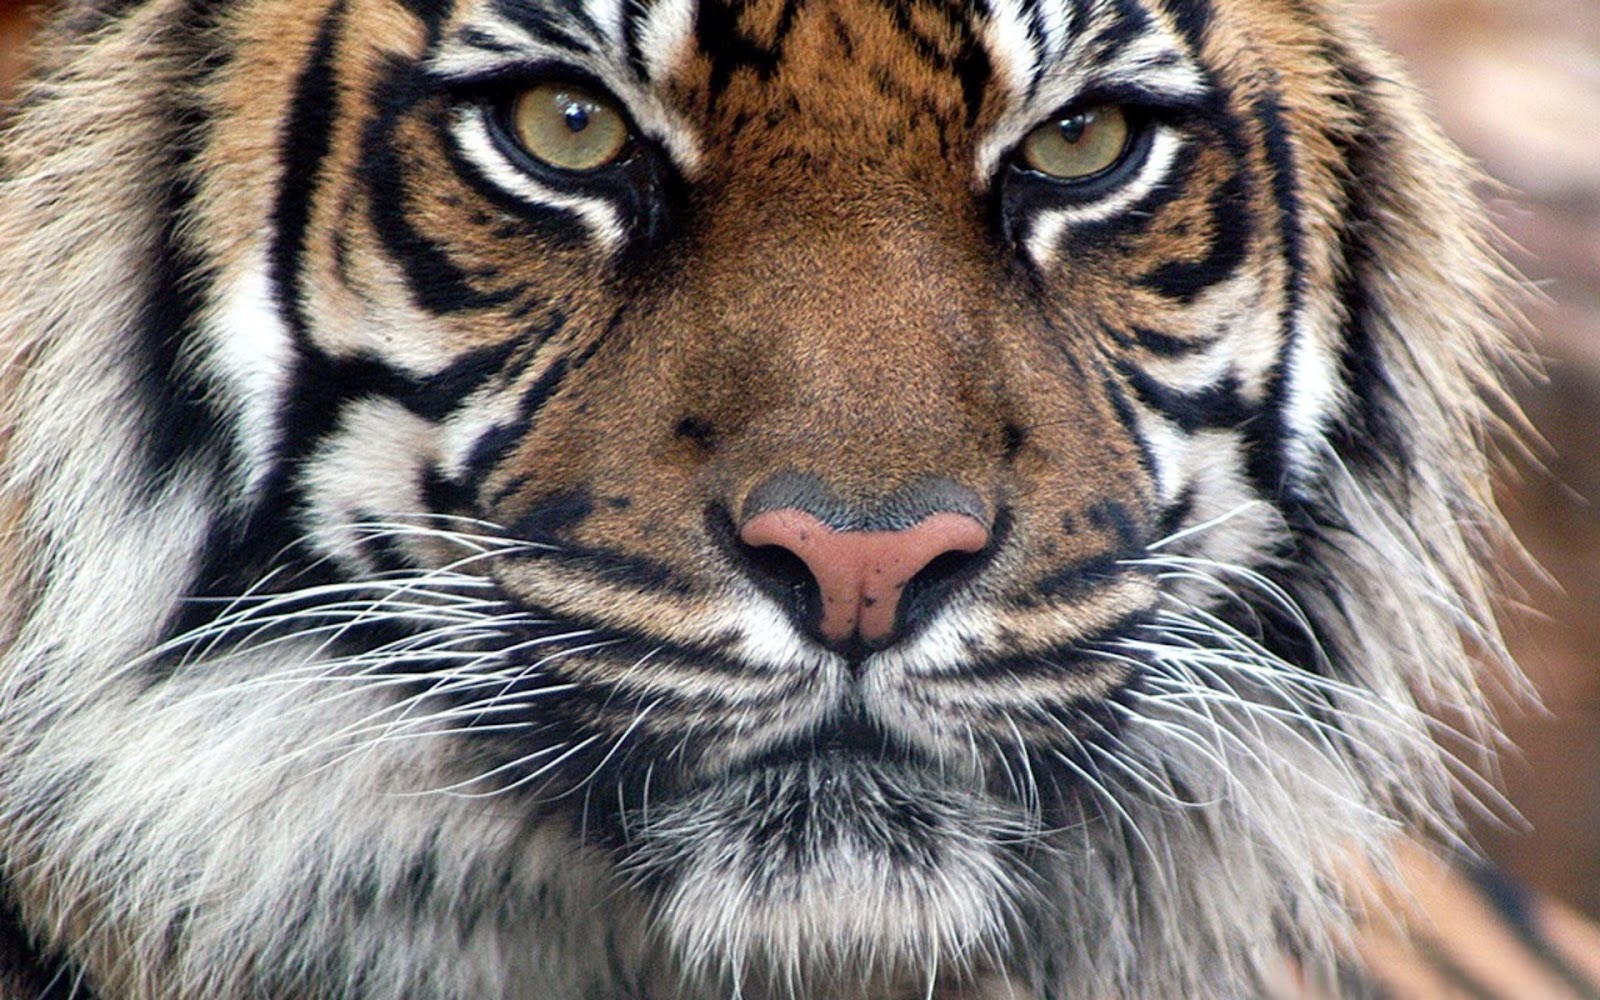 bengal tiger wallpaper,tiger,mammal,wildlife,vertebrate,terrestrial animal